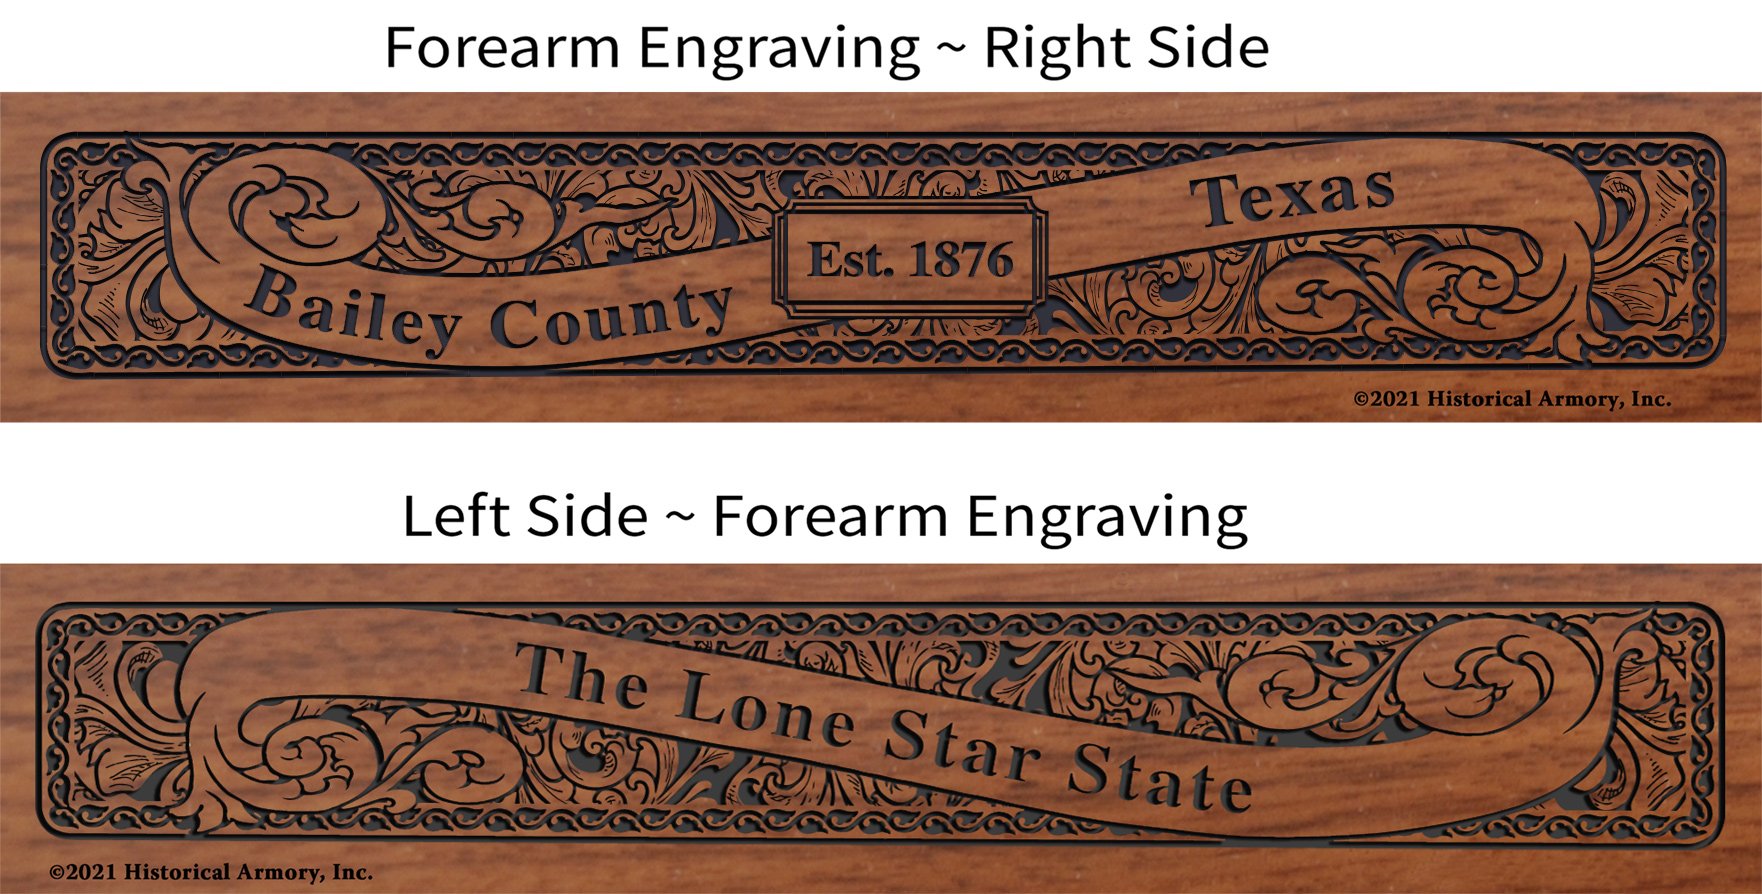 Bailey County Texas Establishment and Motto History Engraved Rifle Forearm